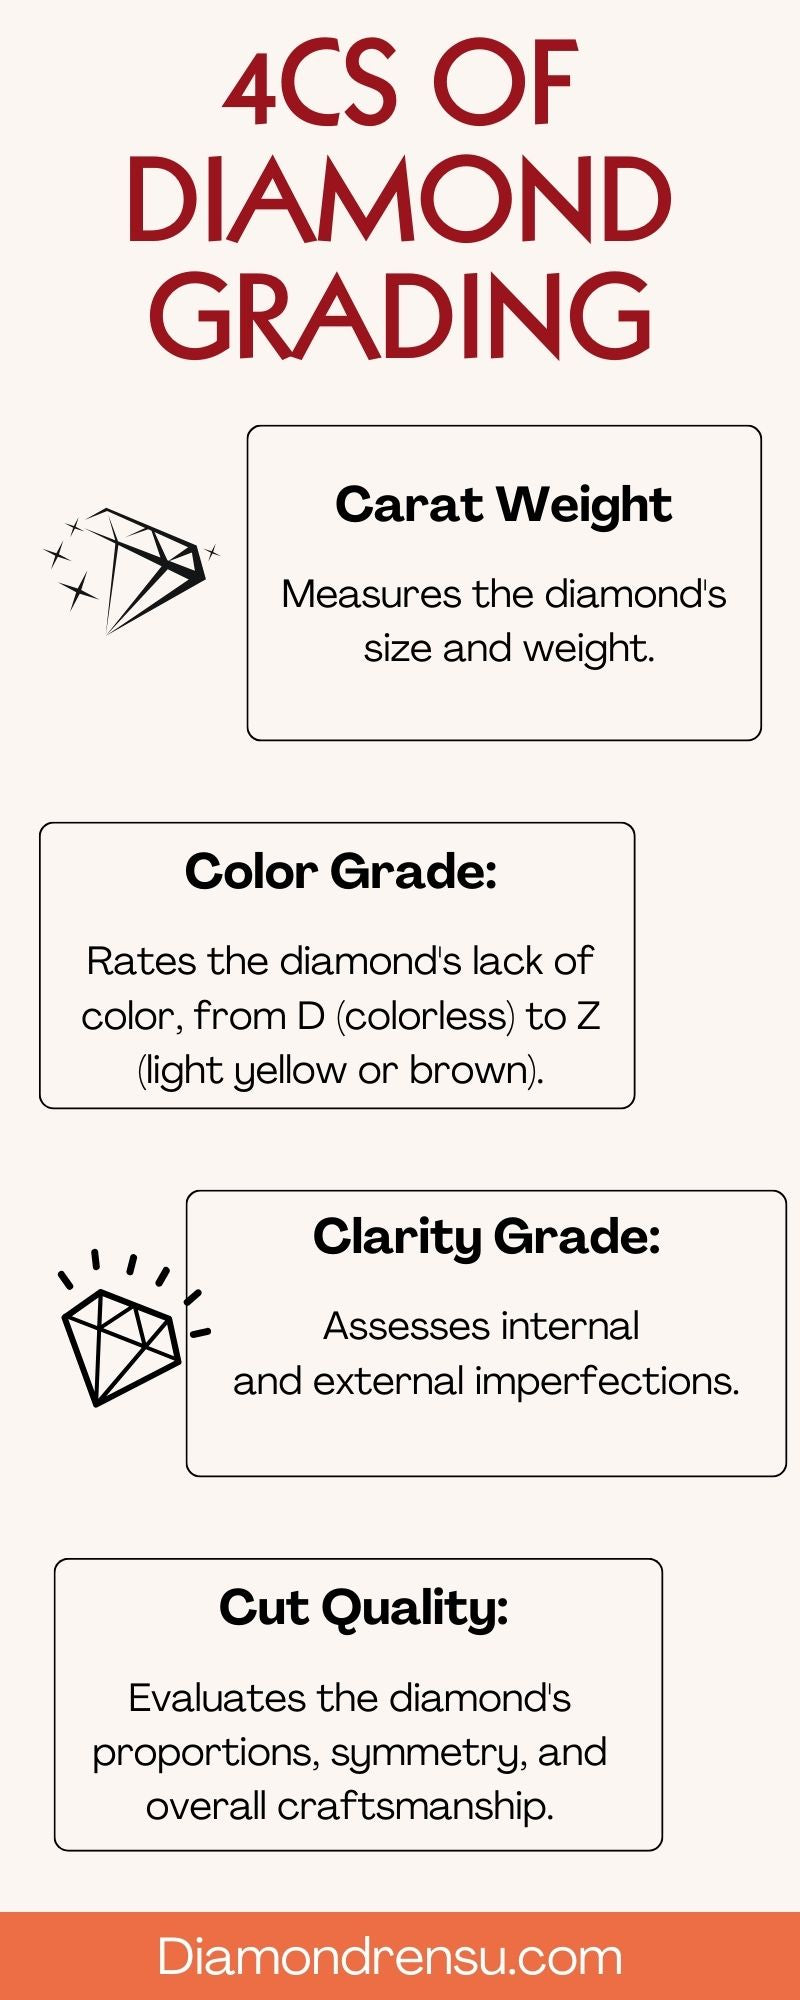 4Cs of Diamond Grading